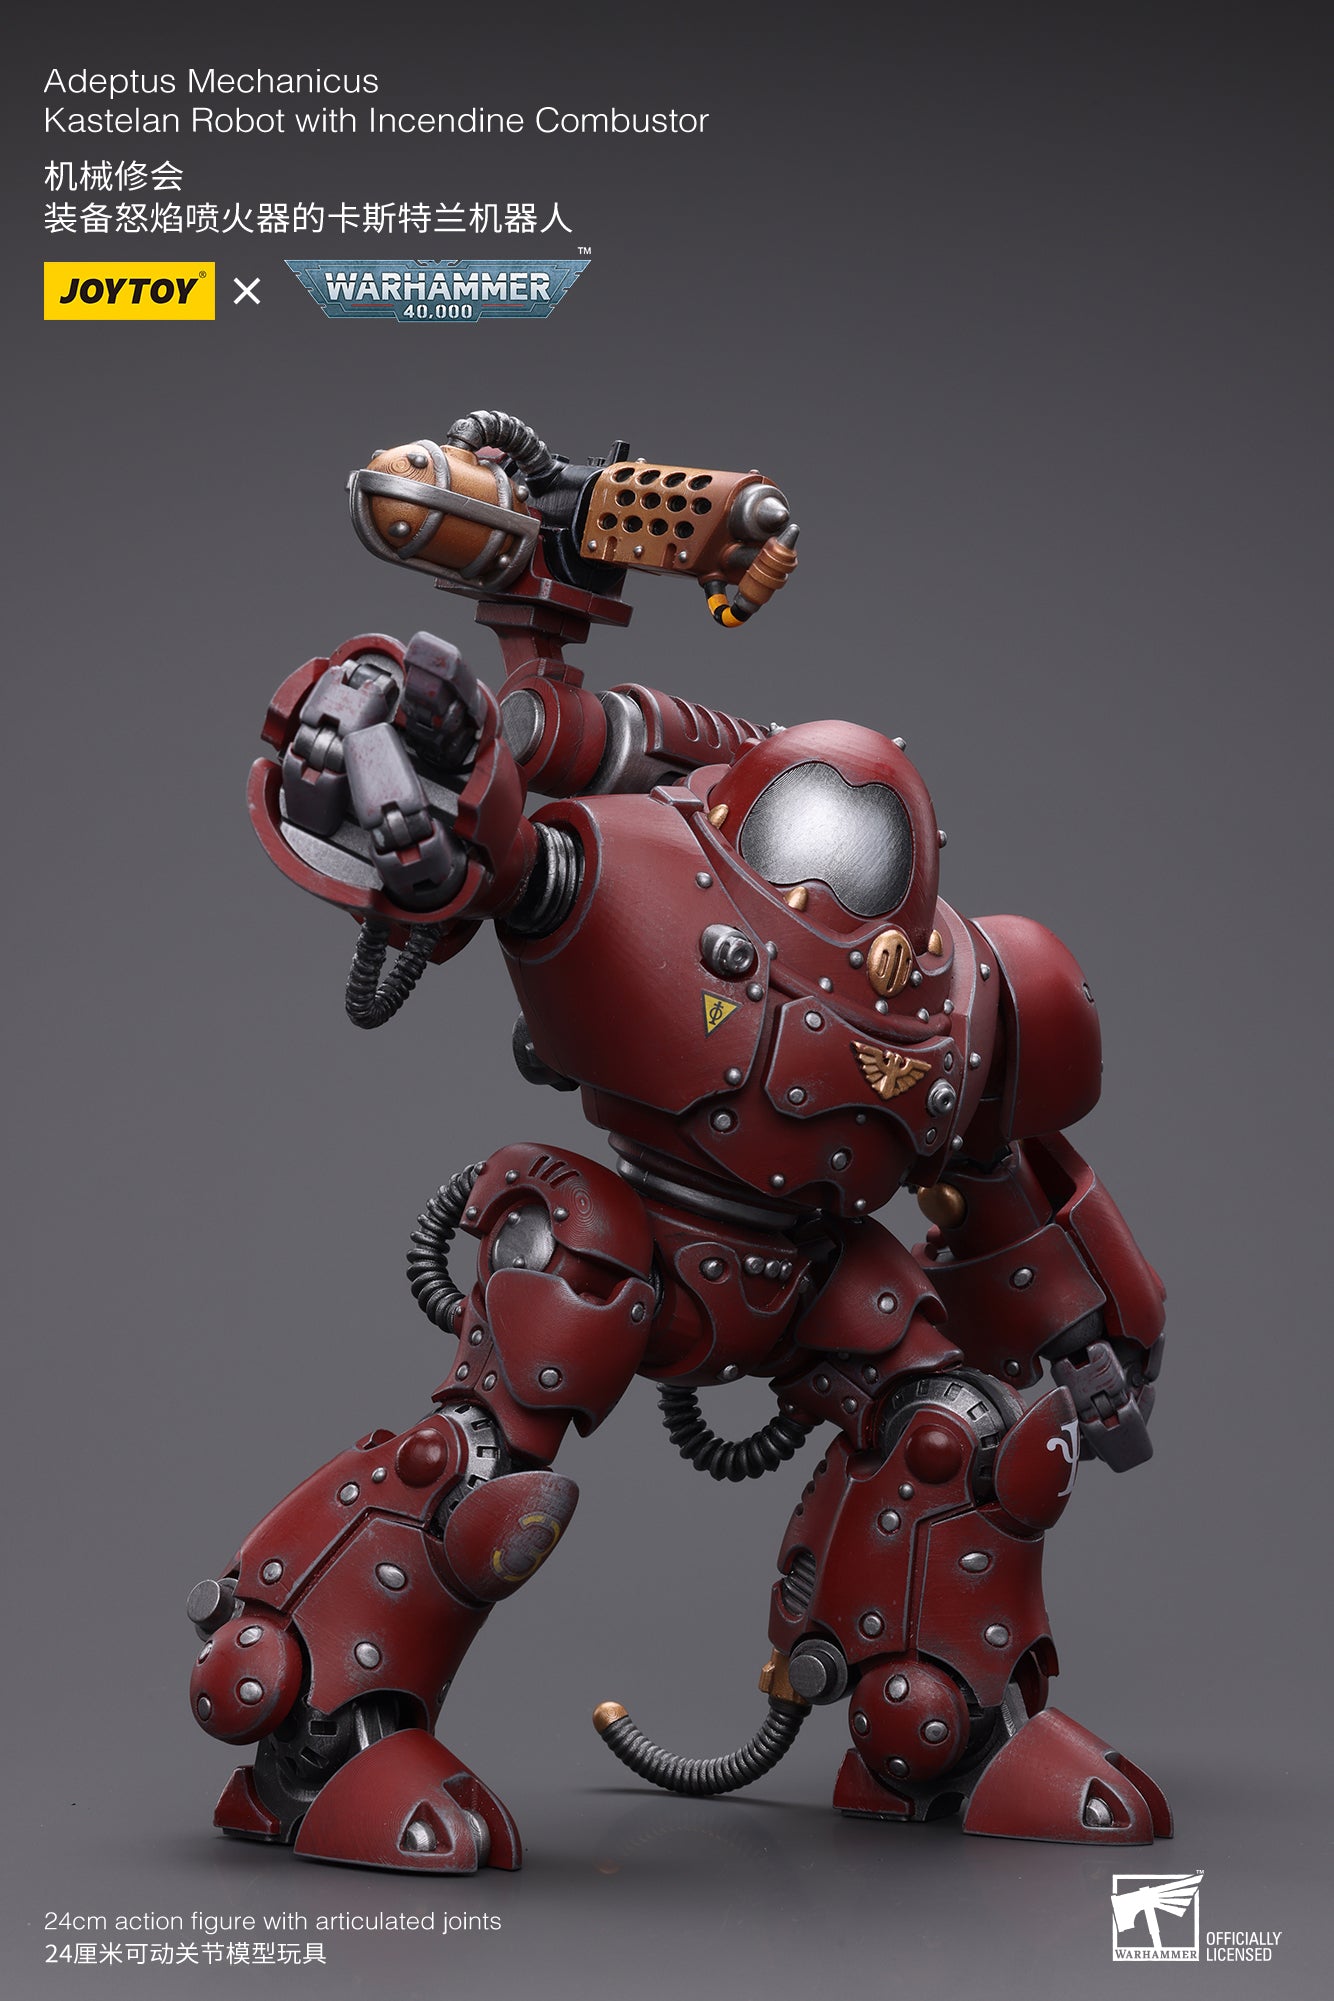 Adeptus Mechanicus Kastelan Robot with Incendine Combustor - Warhammer 40K Action Figure By JOYTOY